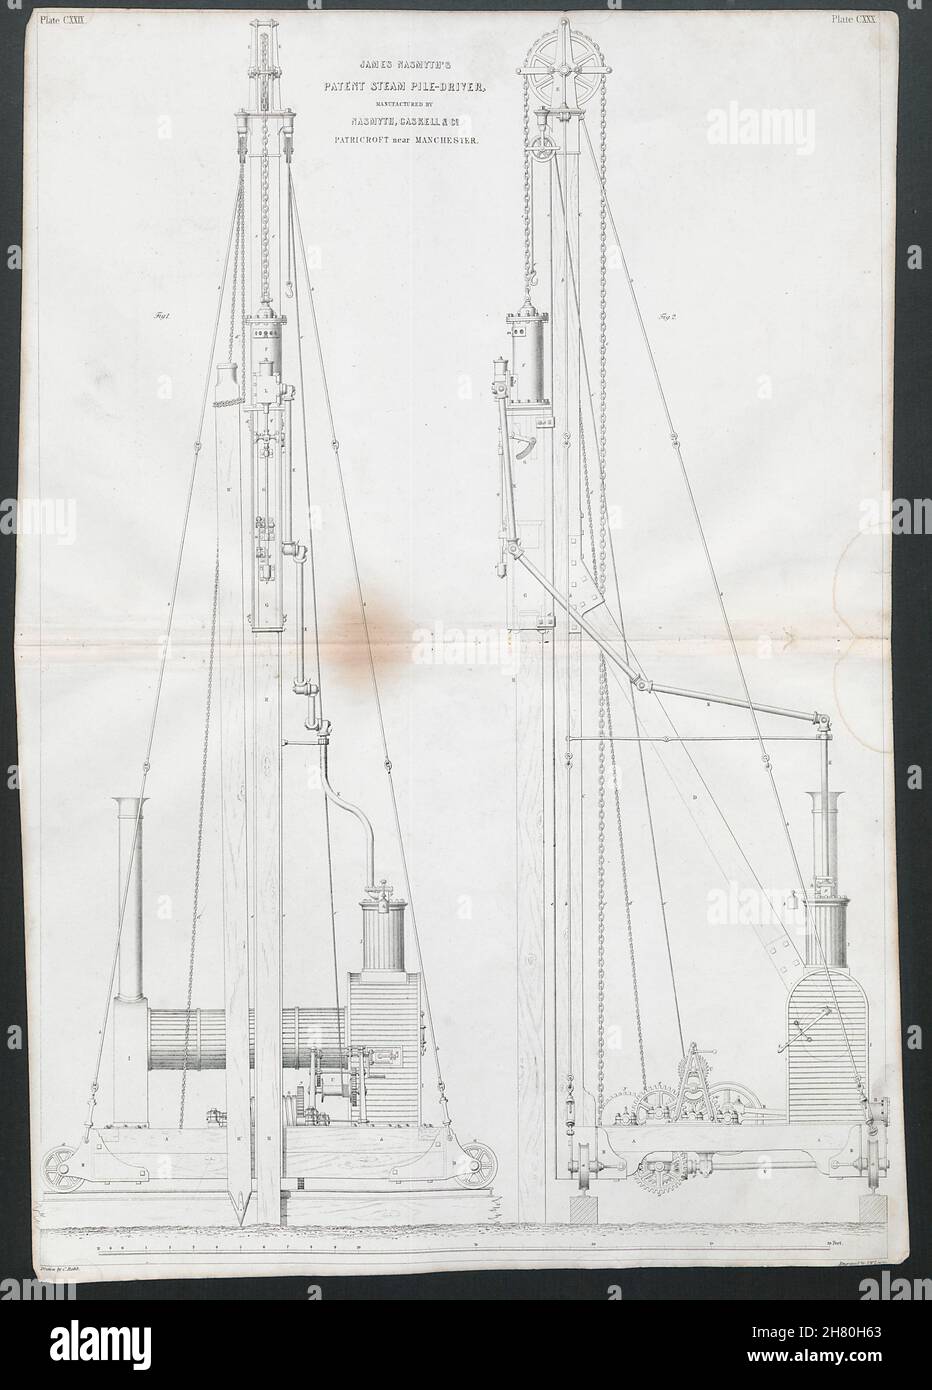 19C ENGINEERING DRAWING Patent steam pile-driver. James Nasmyth, Patricroft 1847 Stock Photo